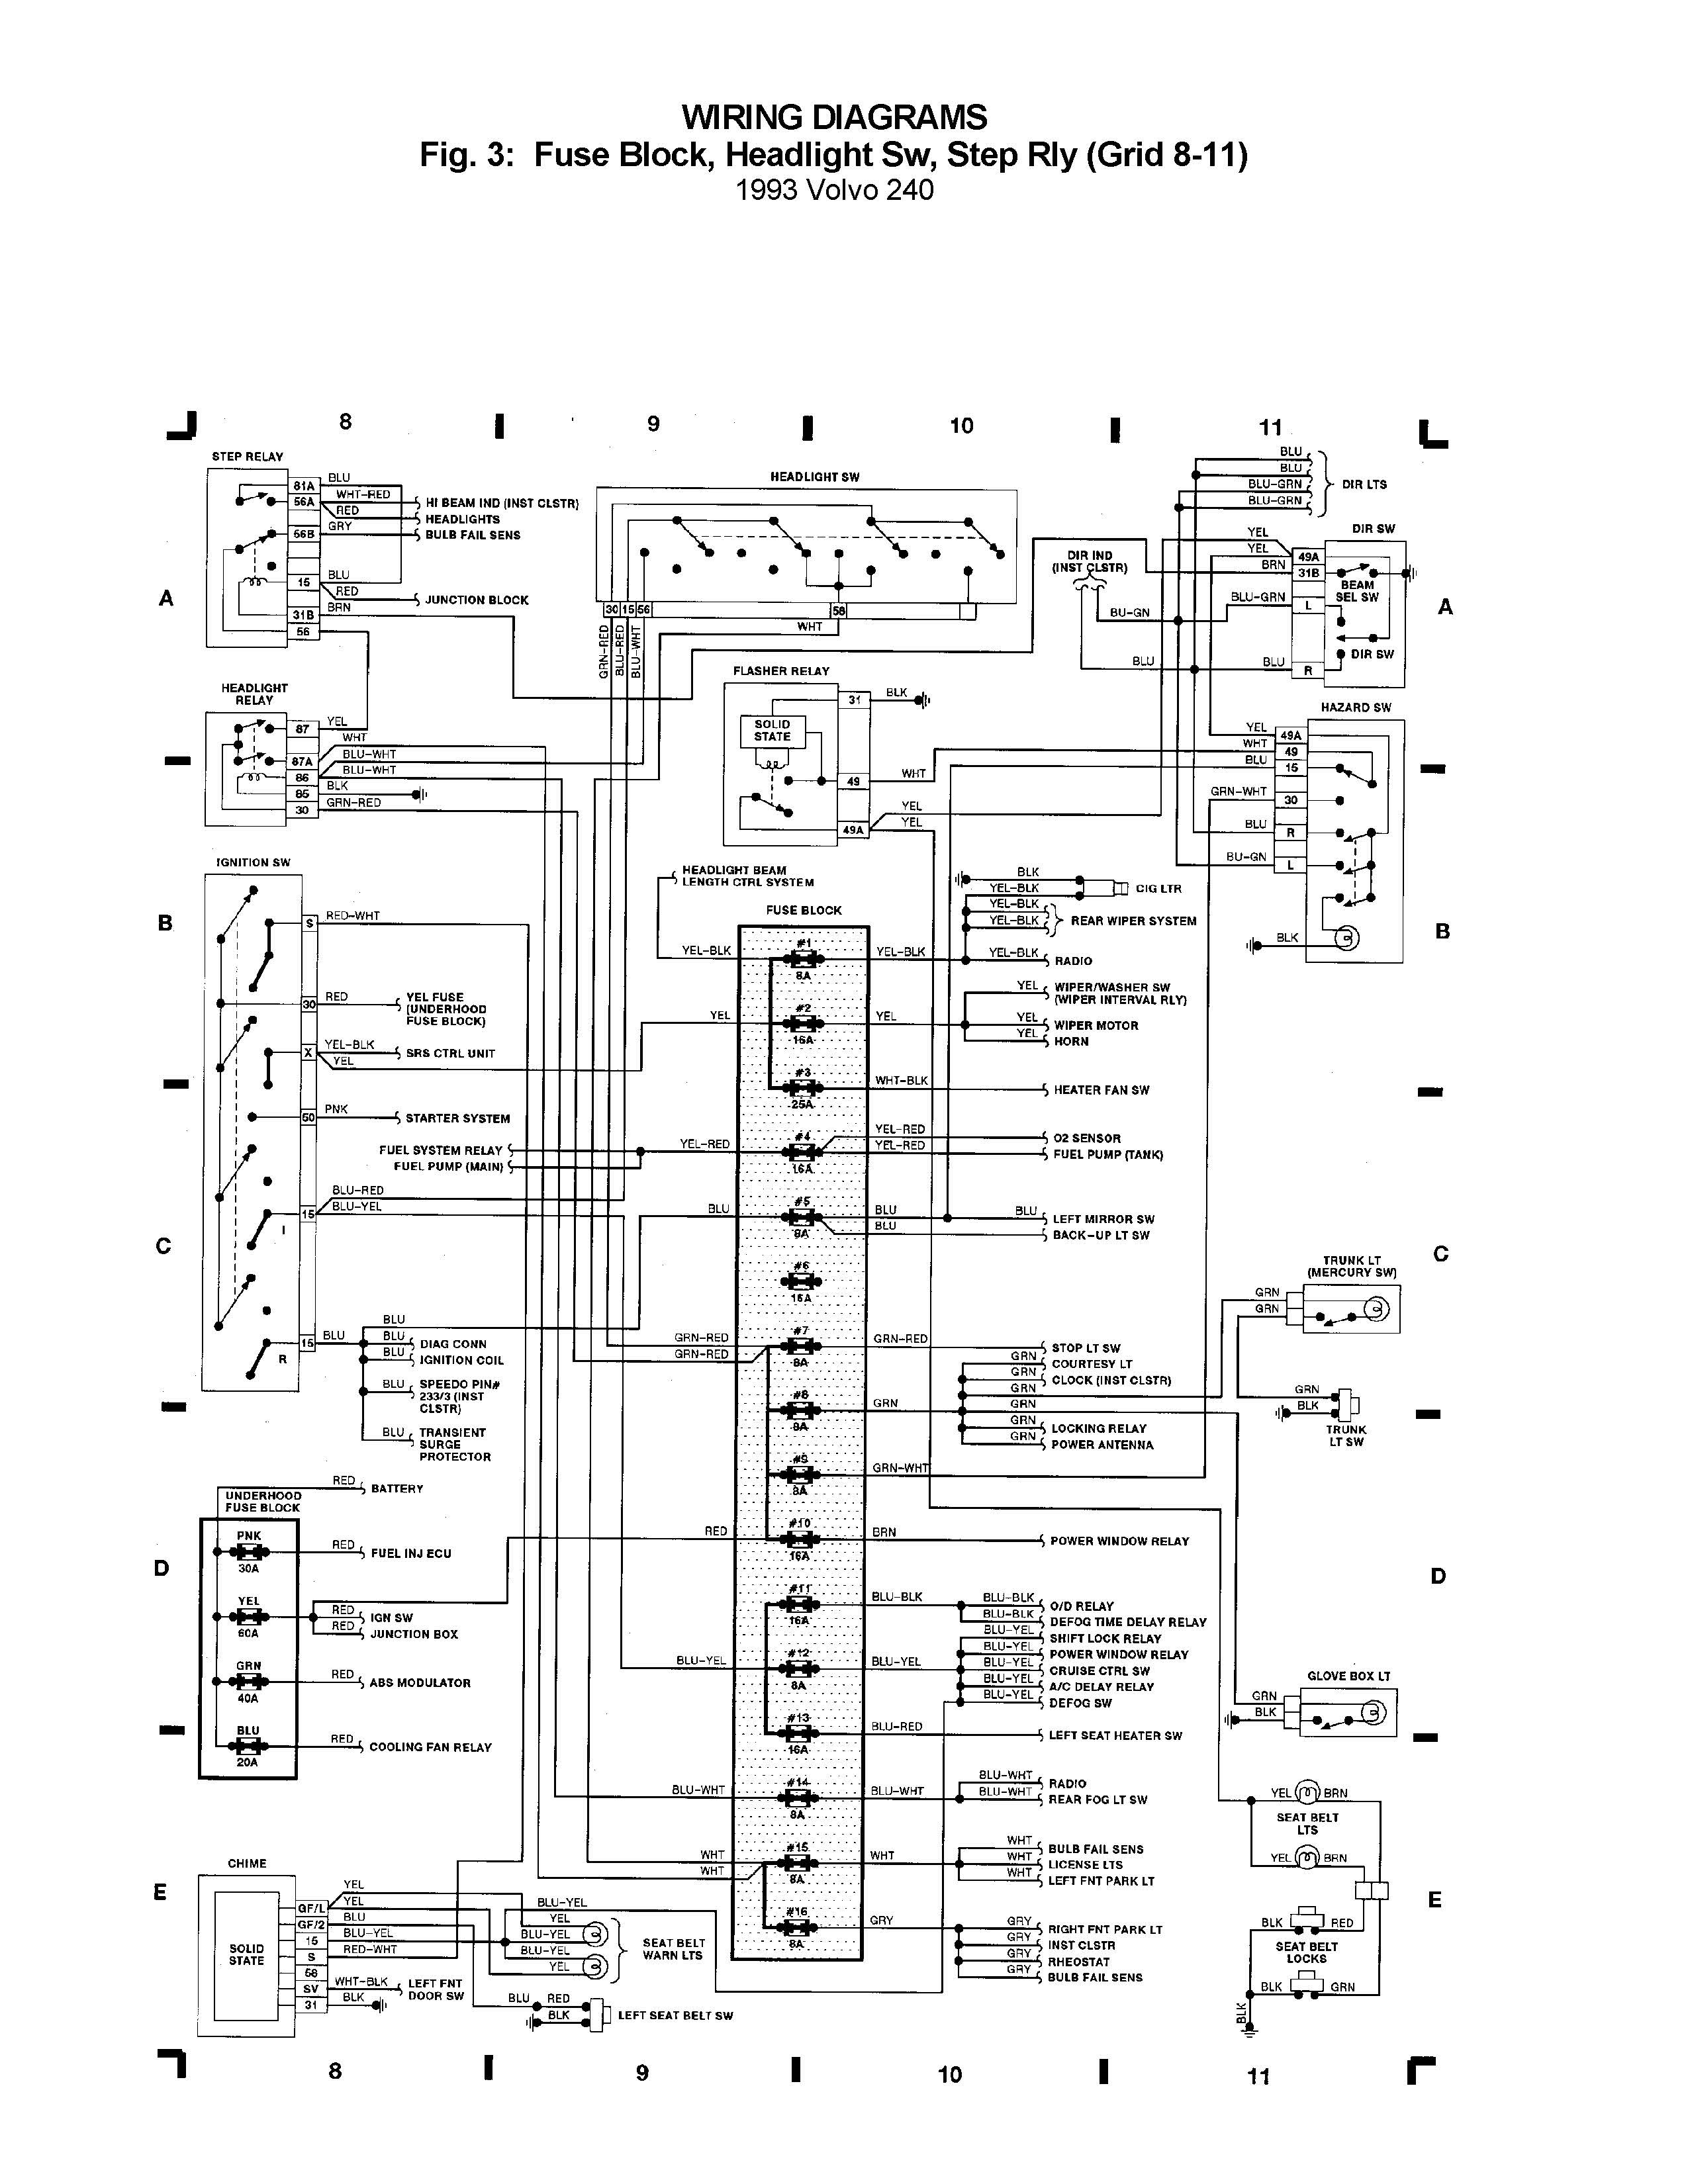 [DIAGRAM] 1989 Volvo 240 Ignition Wiring Diagram FULL Version HD